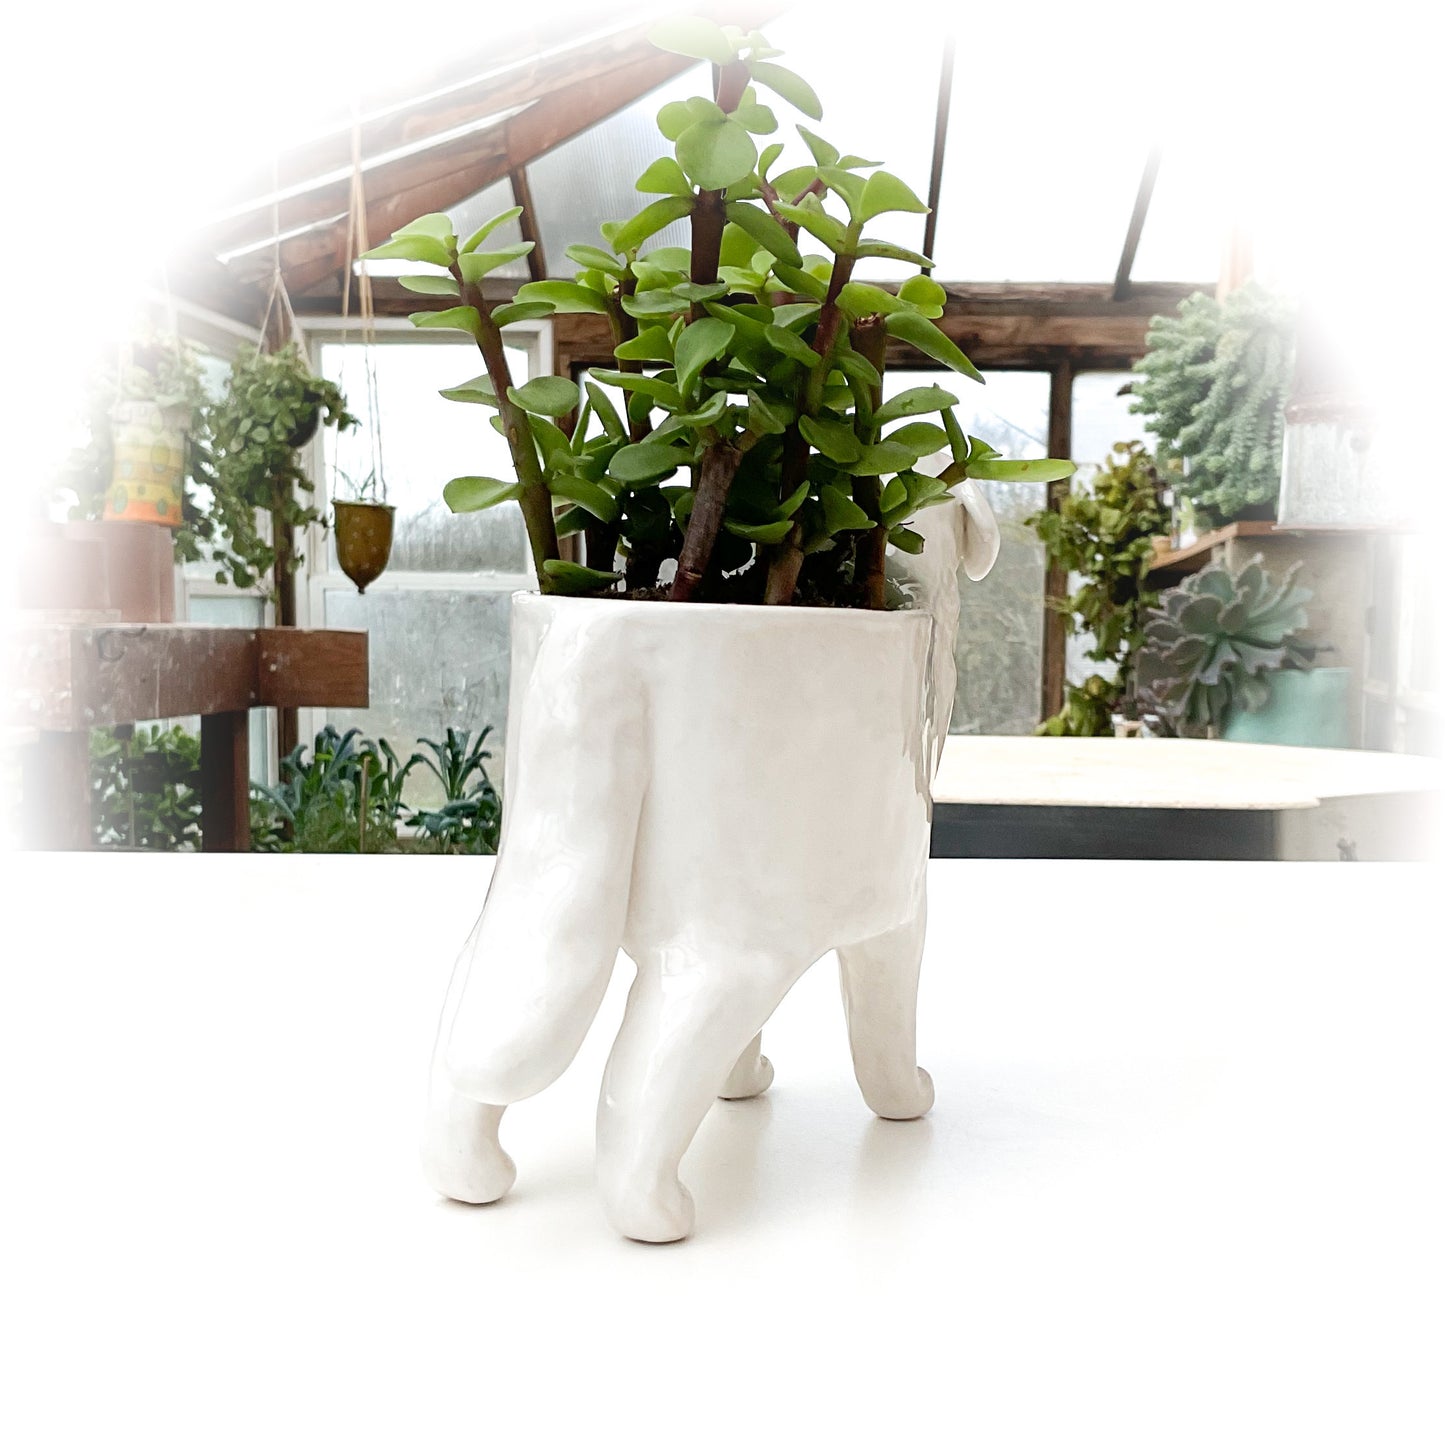 Great Pyrenees Dog Planter - Ceramic Dog Plant Pot